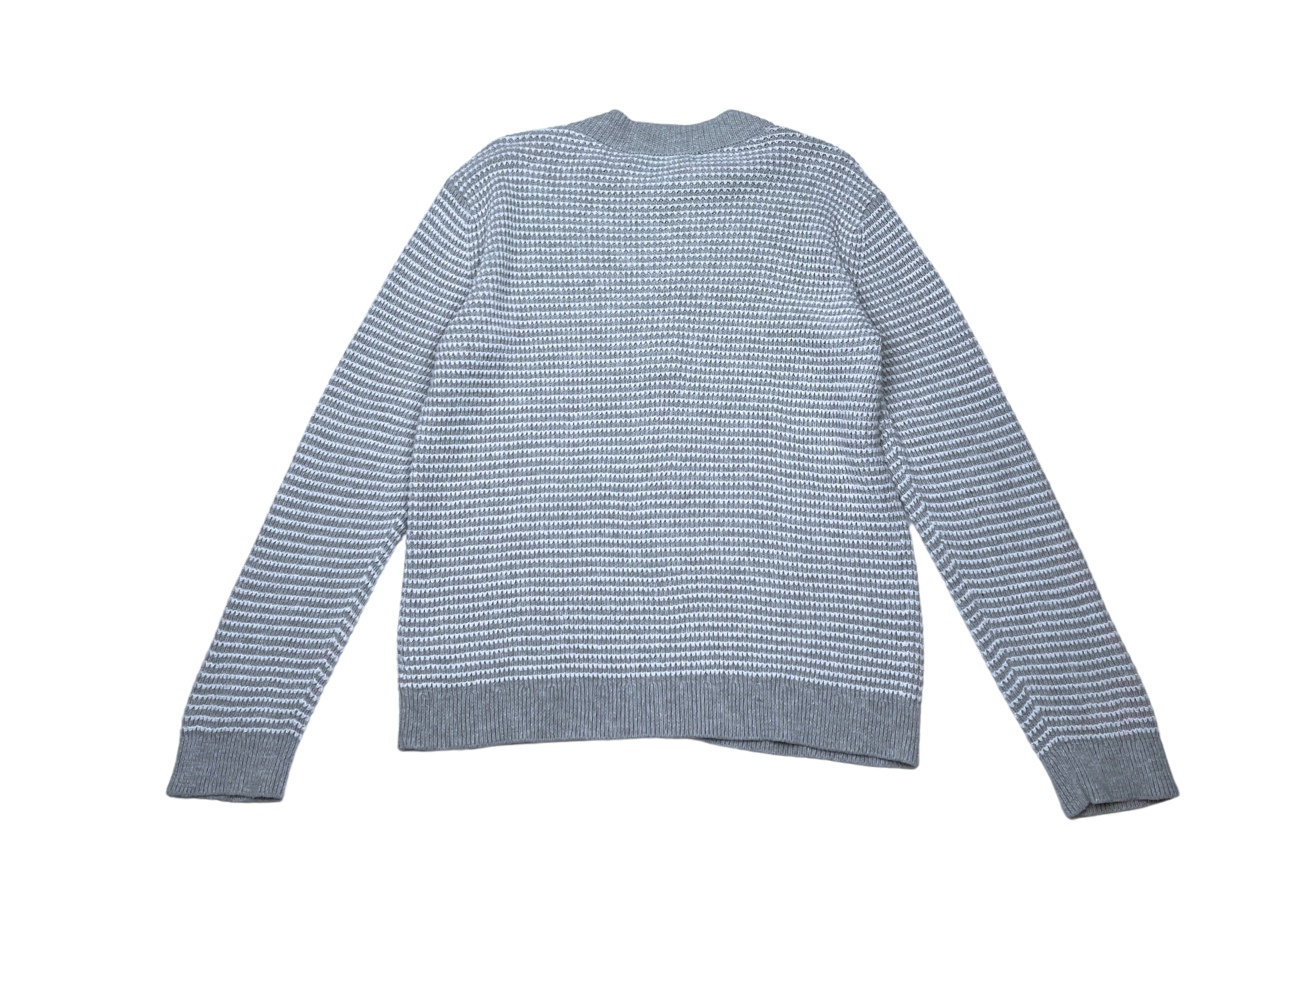 BONPOINT - Pull zippé gris & blanc - 6 ans